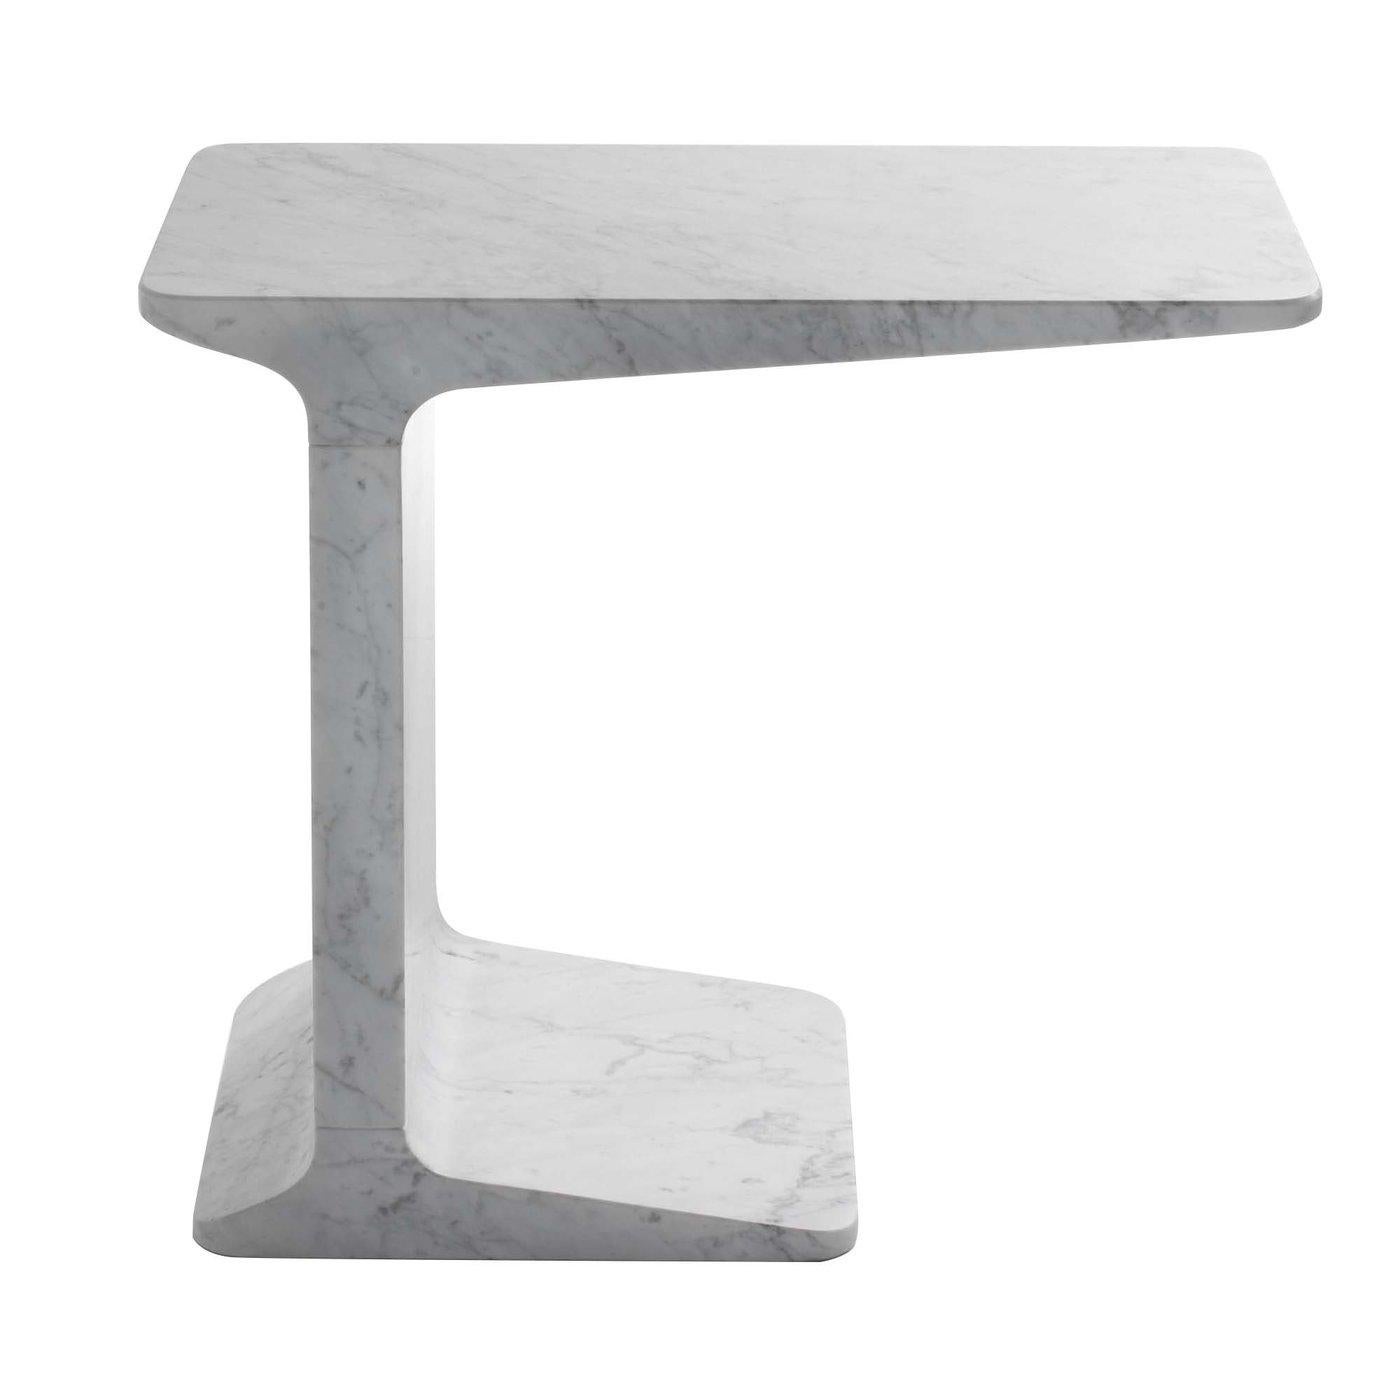 Side table in white Carrara marble, matt polished finish.